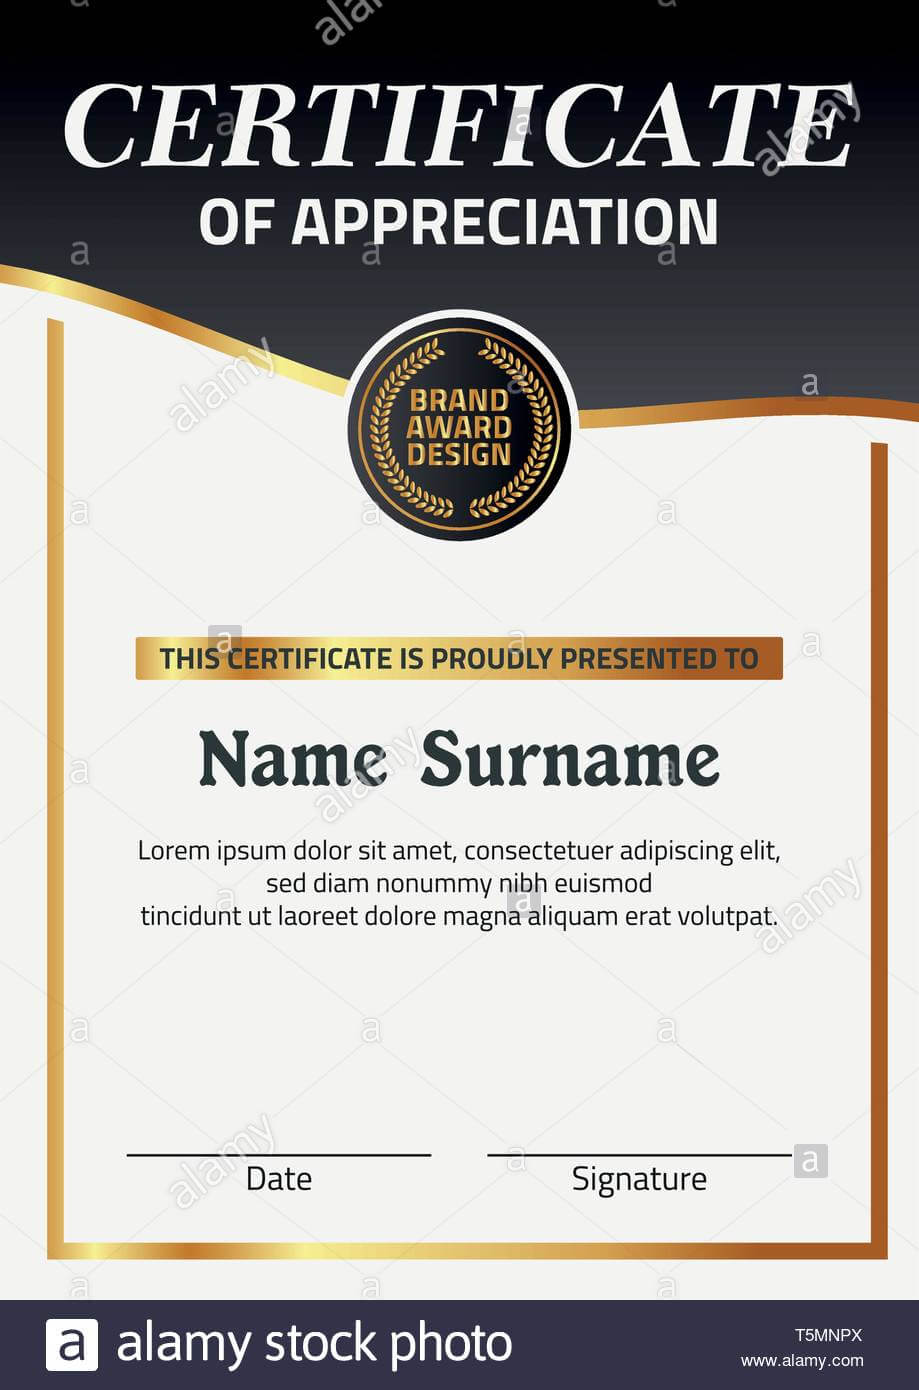 Vector Certificate Template. Illustration Certificate In A4 In Certificate Template Size